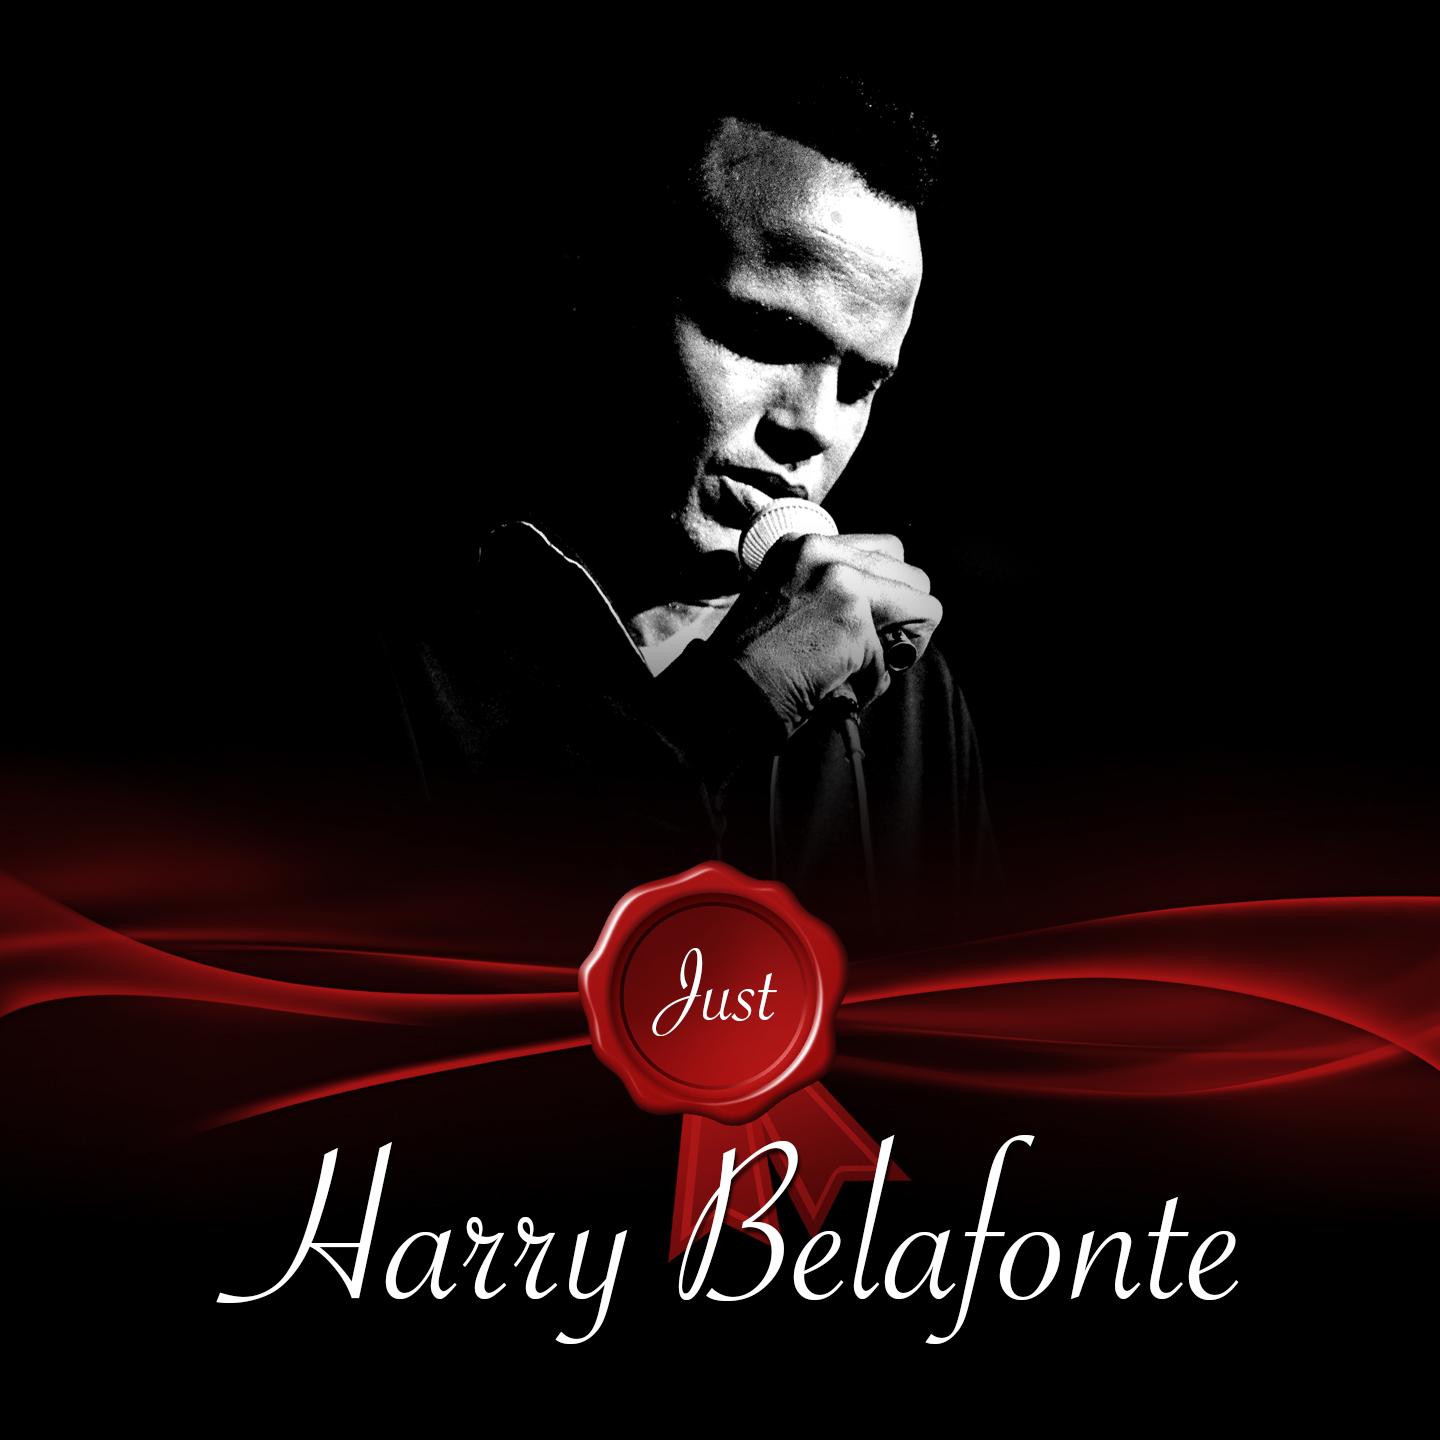 Just / Harry Belafonte